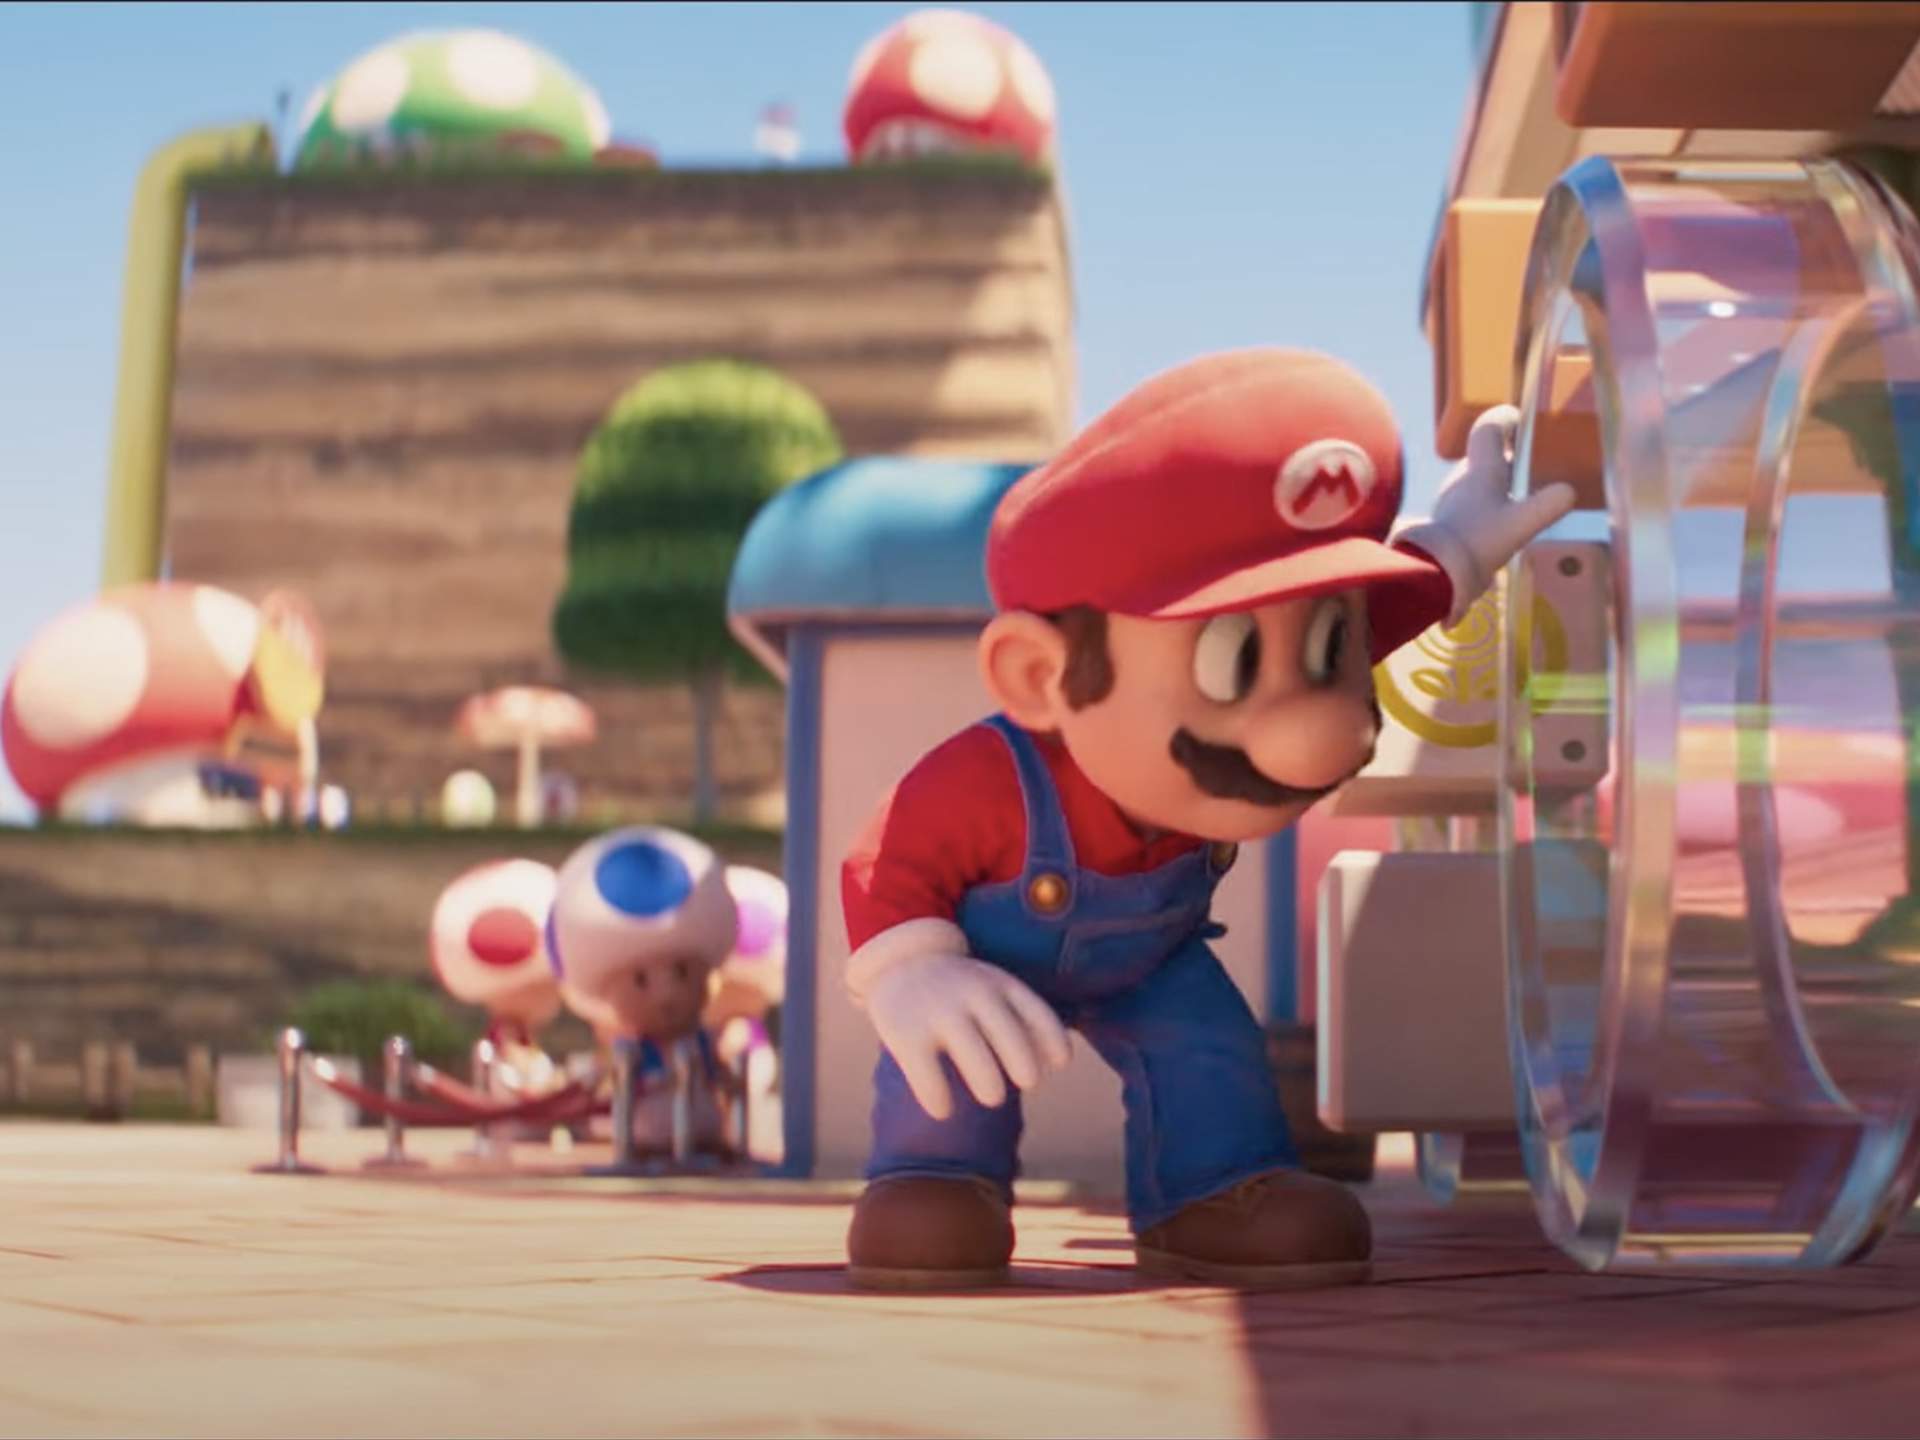 Let's Go: The Latest Sneak Peek at 'The Super Mario Bros Movie' Is a Mushroom Kingdom Super Fan's Dream